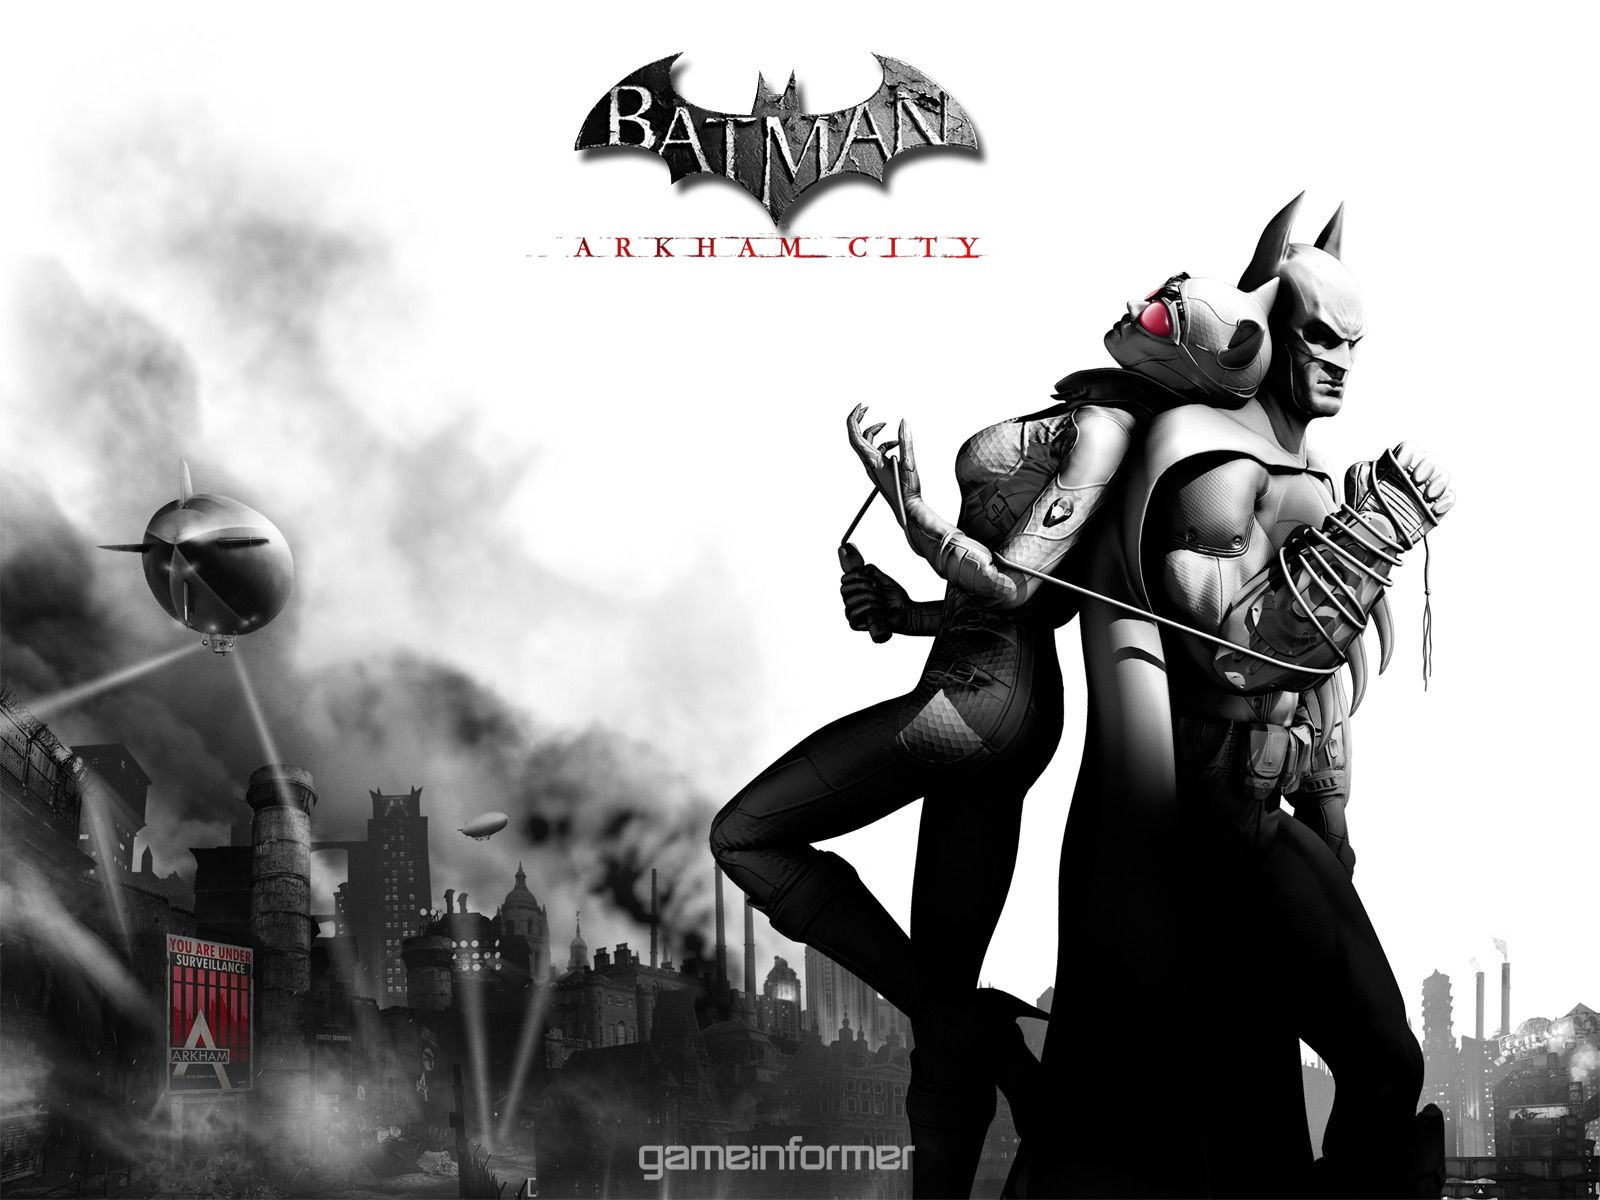 Batman Arkham City photo.jpg